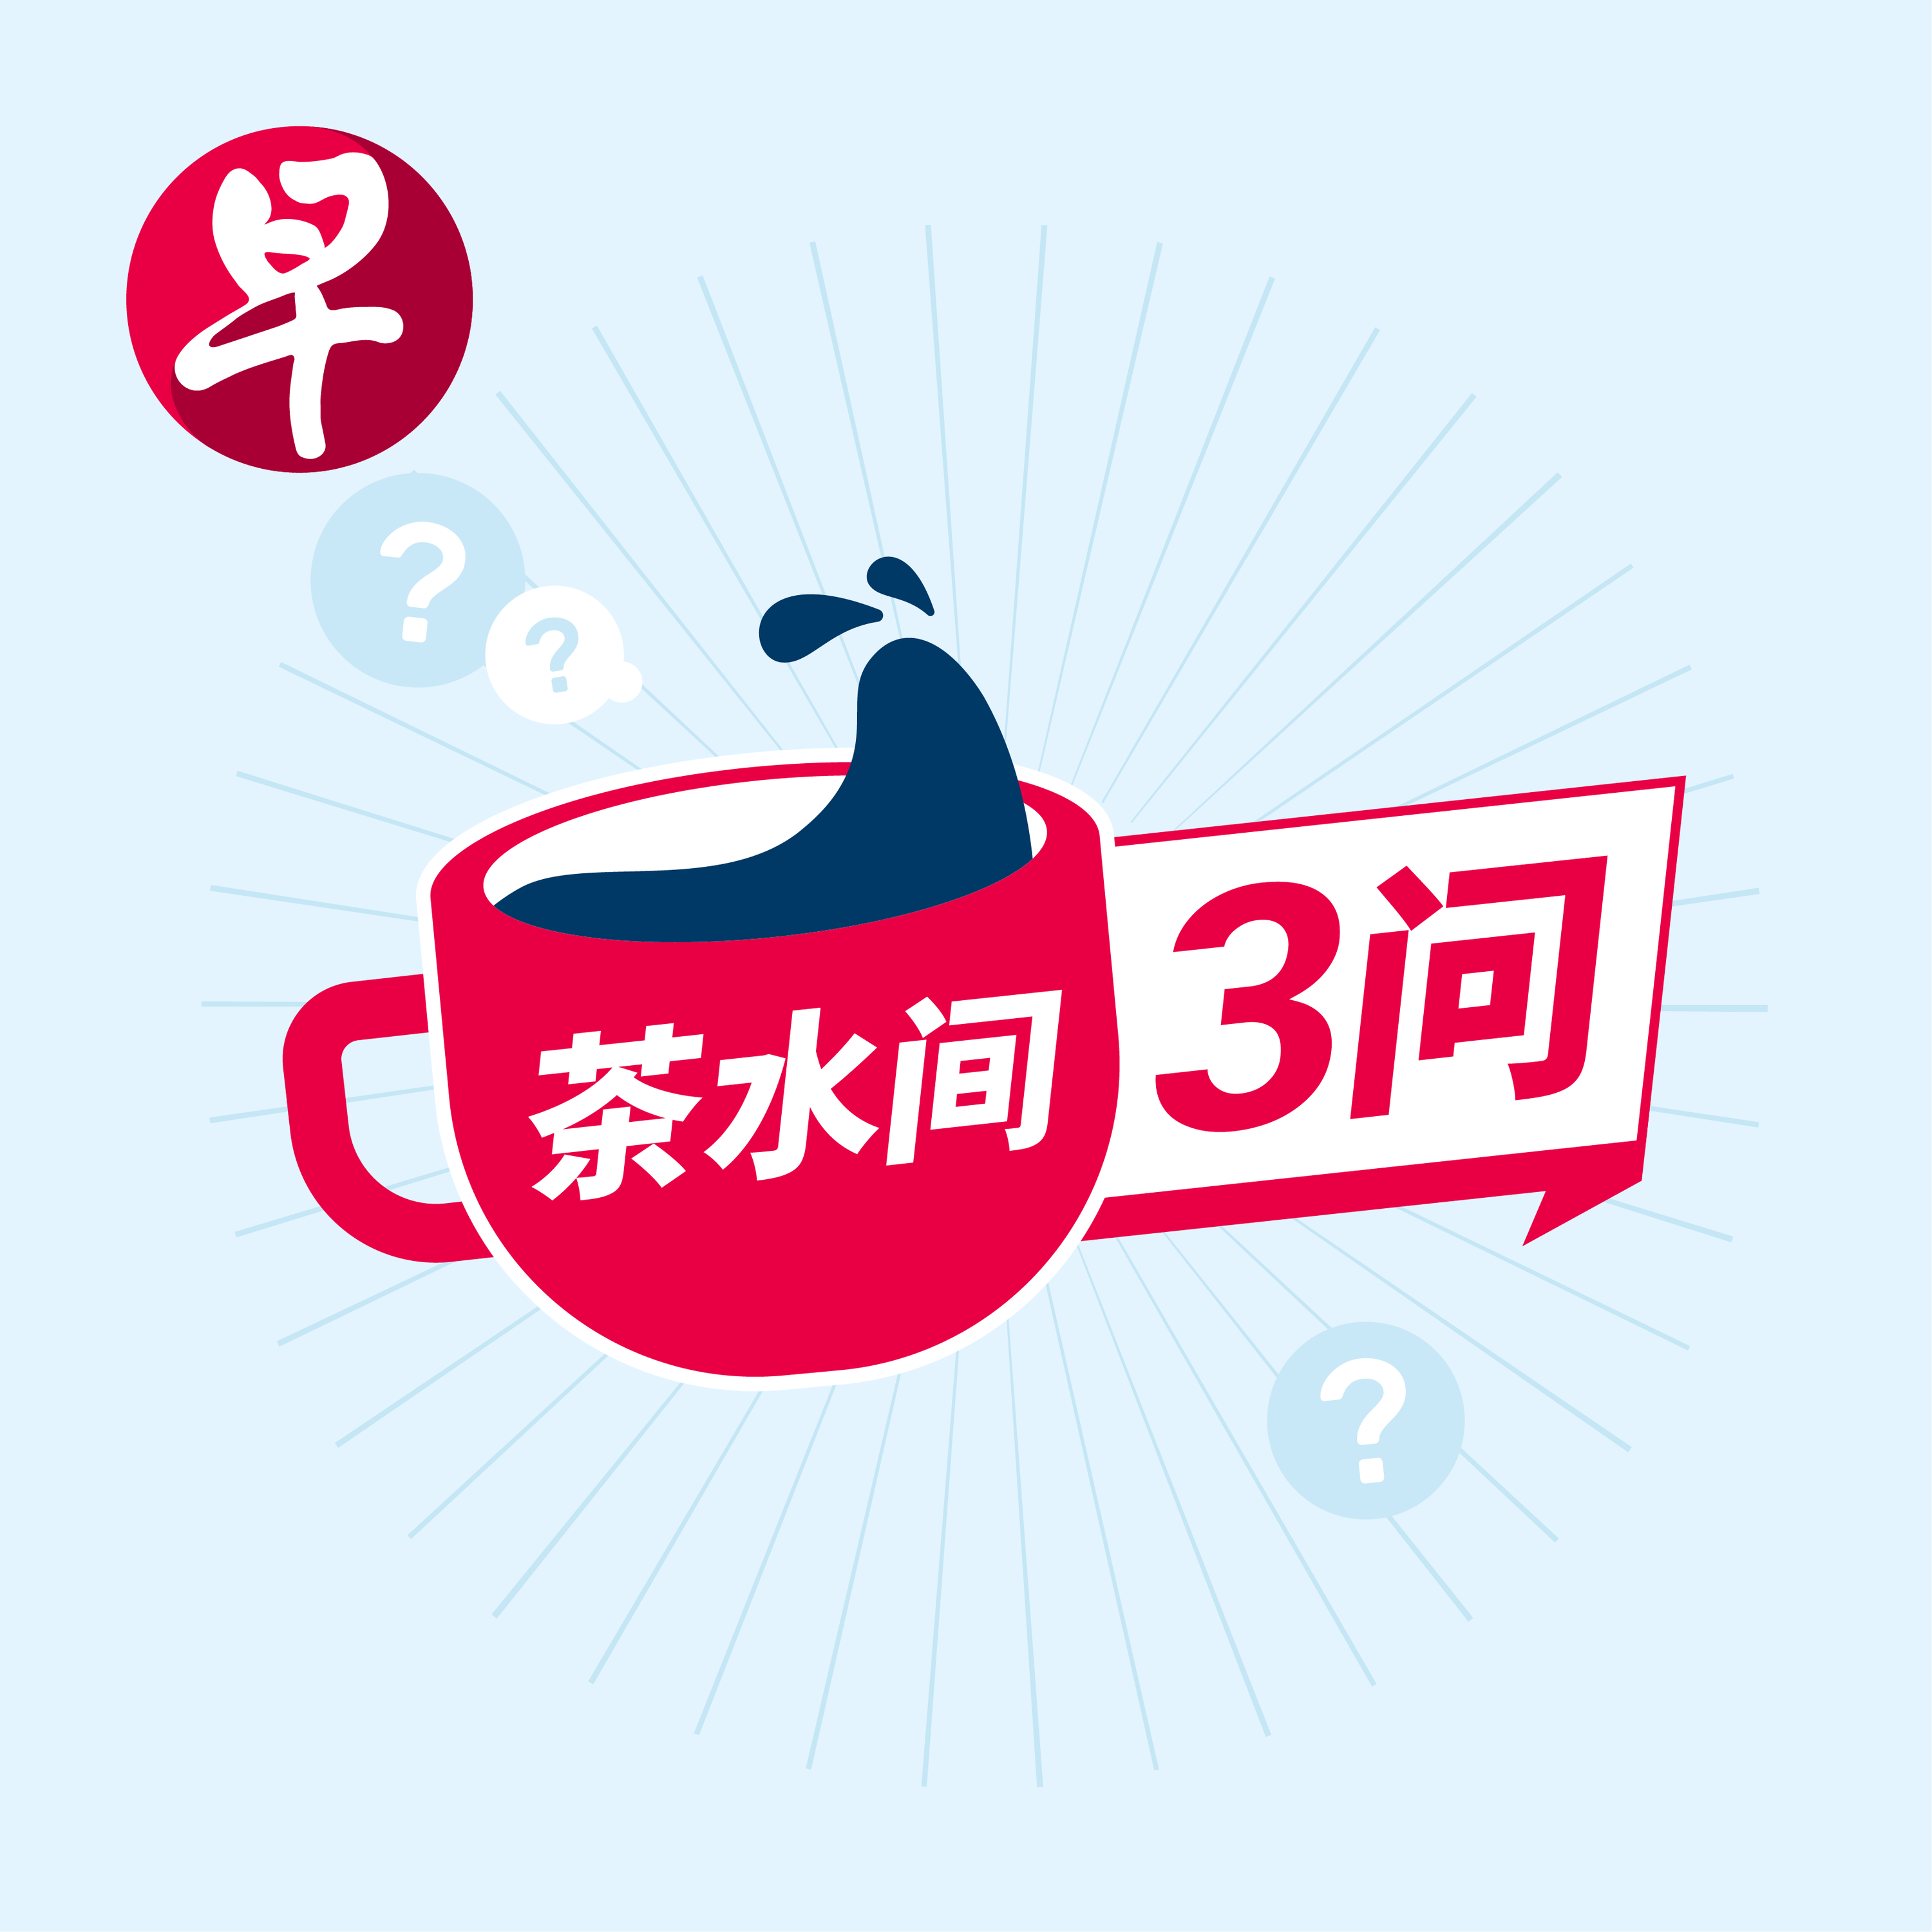 新易通大U转、牛水车龙年灯饰、带宠物旅行 SimplyGostan, Chinatown CNY dragon, travelling with pets